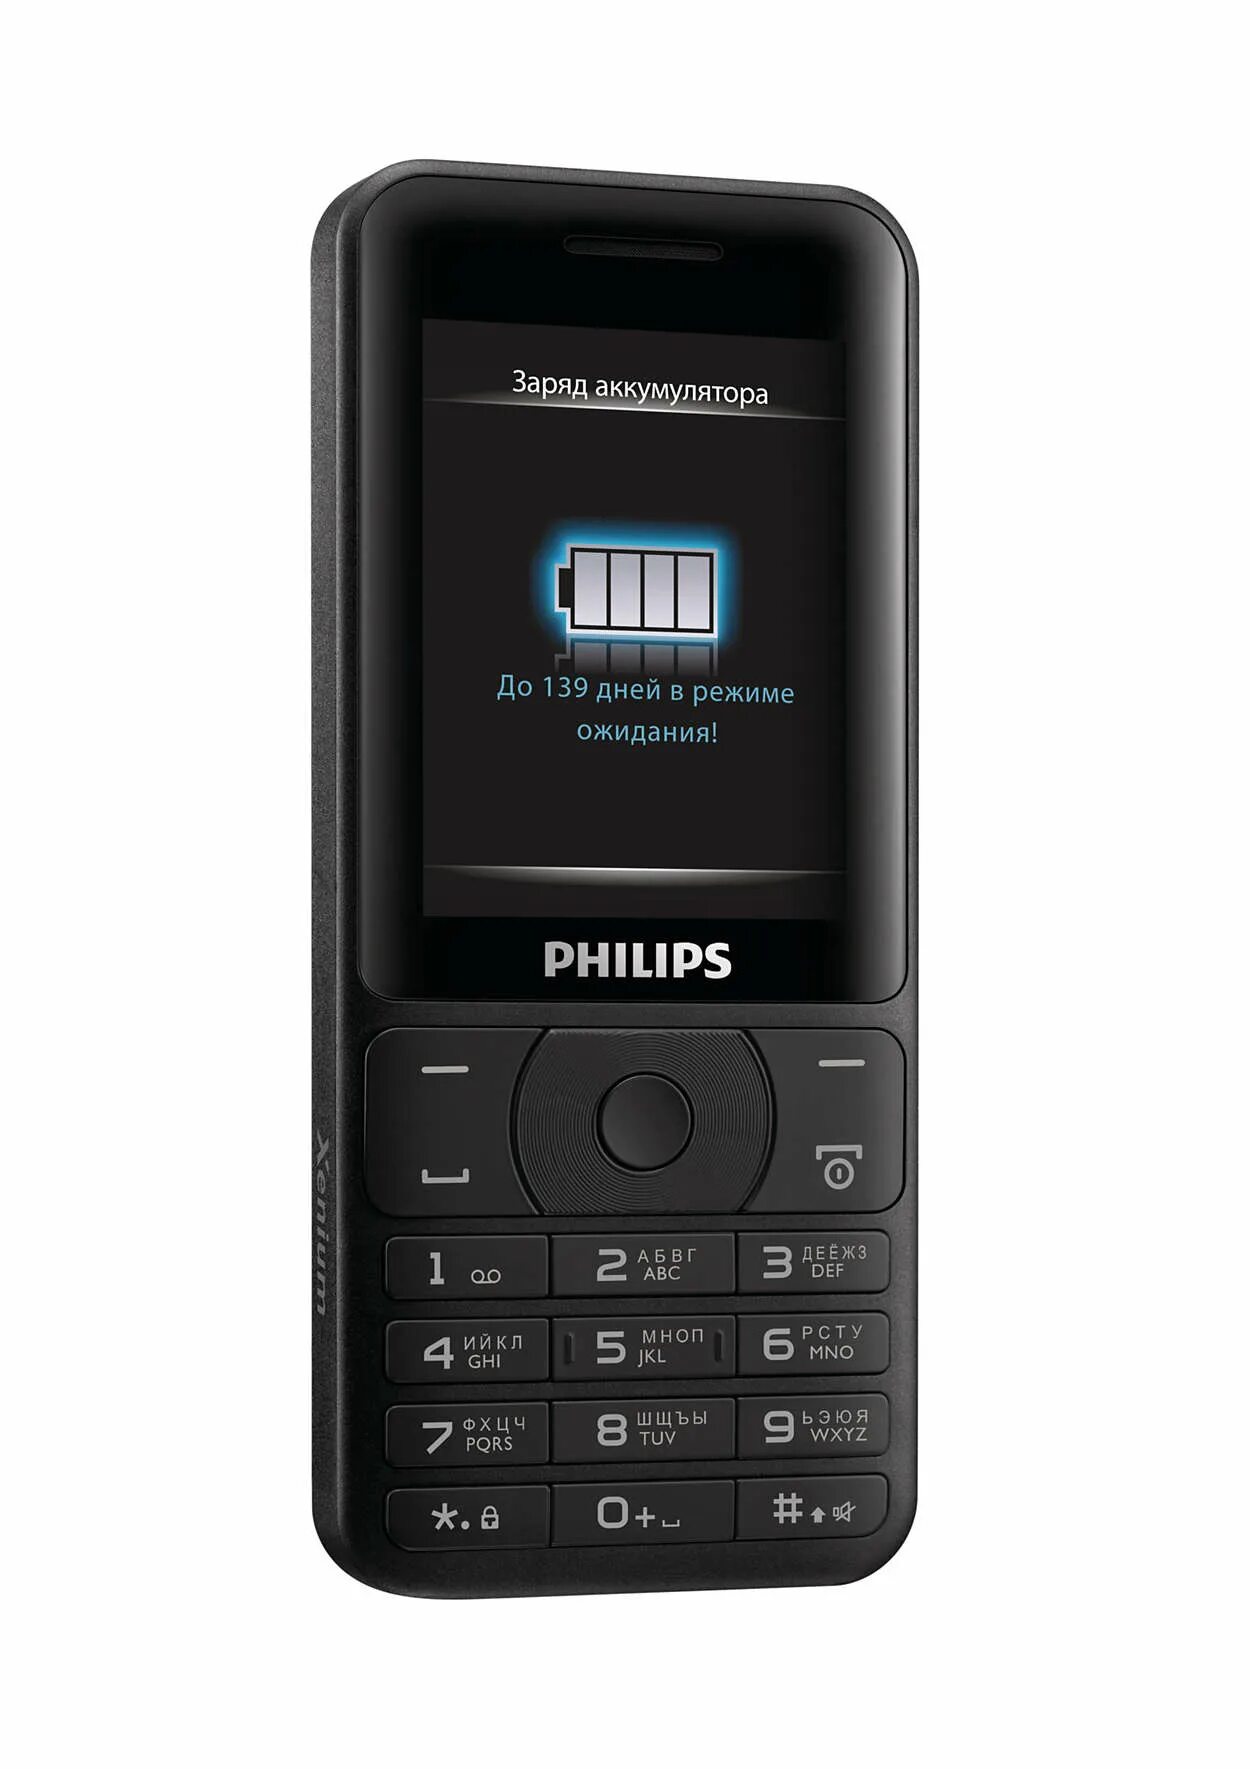 Philips e180 Xenium Black. Philips Xenium e180. Сотовый телефон Philips Xenium e180. Philips Xenium у 180. Телефон б е